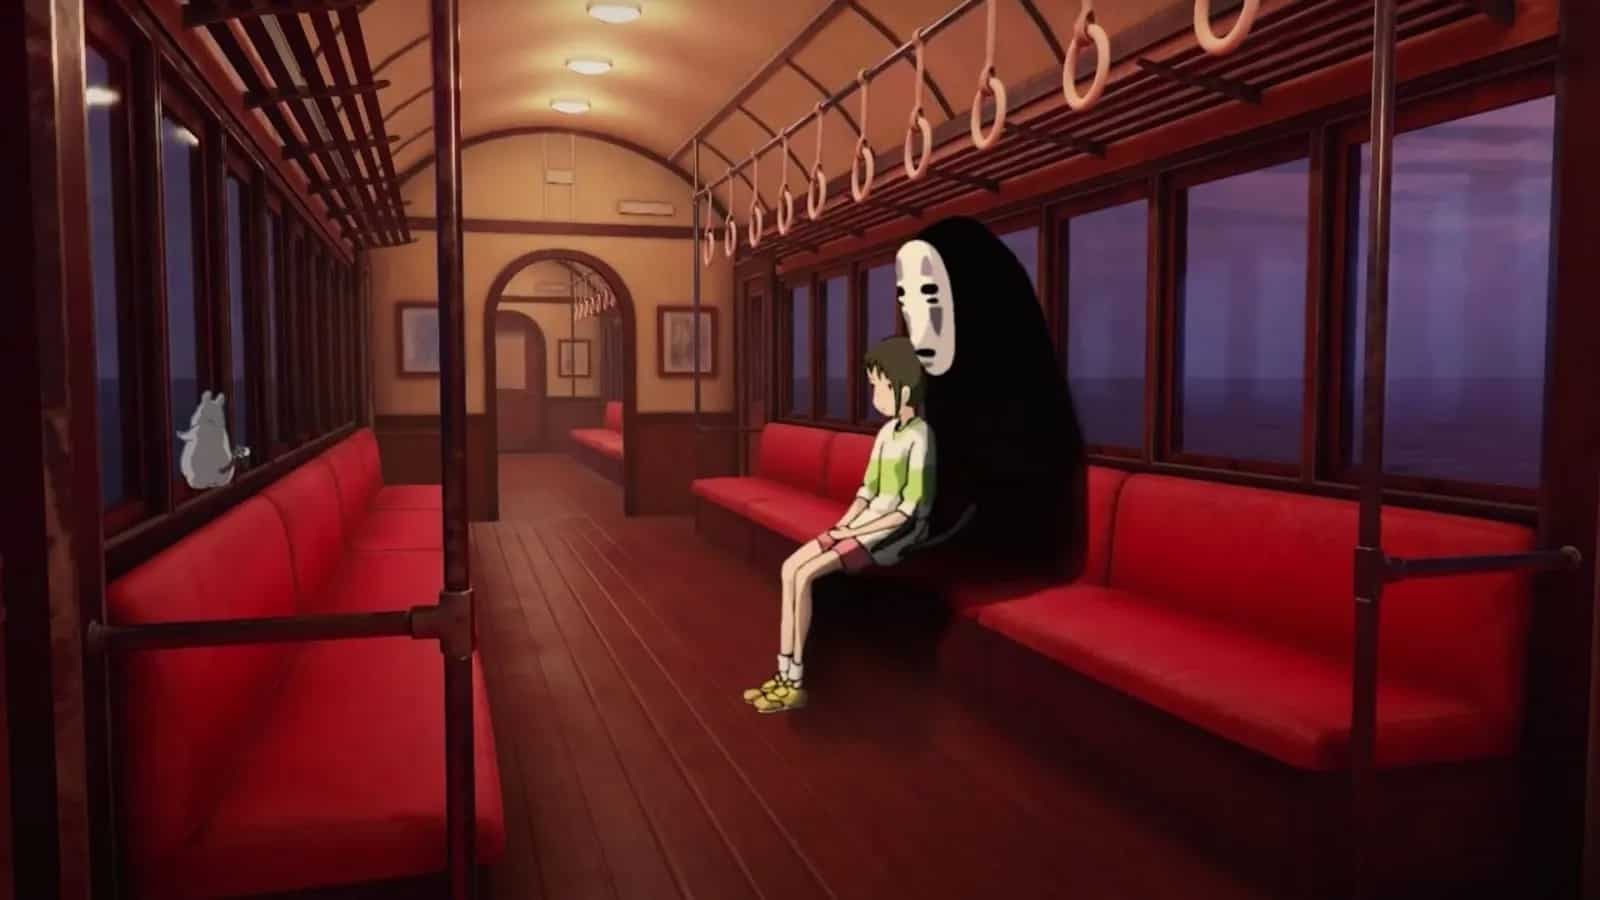 Spirited Away anime